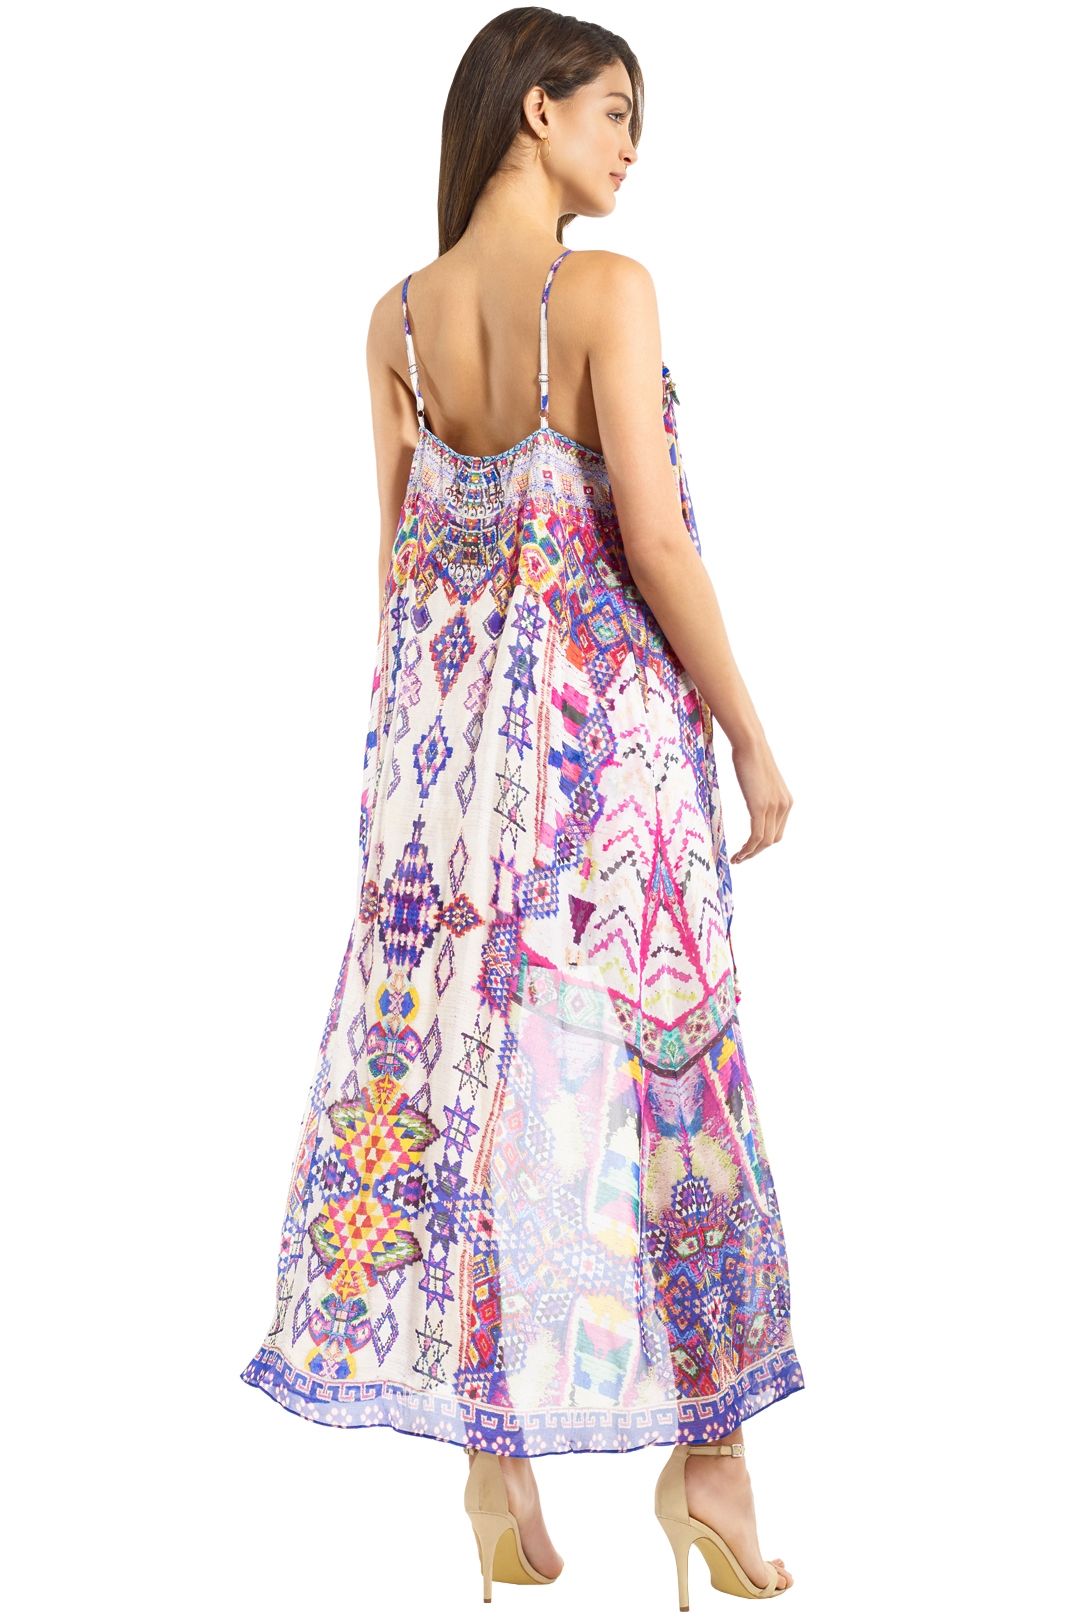 Camilla - Electric Aztec Dress - Purple Pink - Back